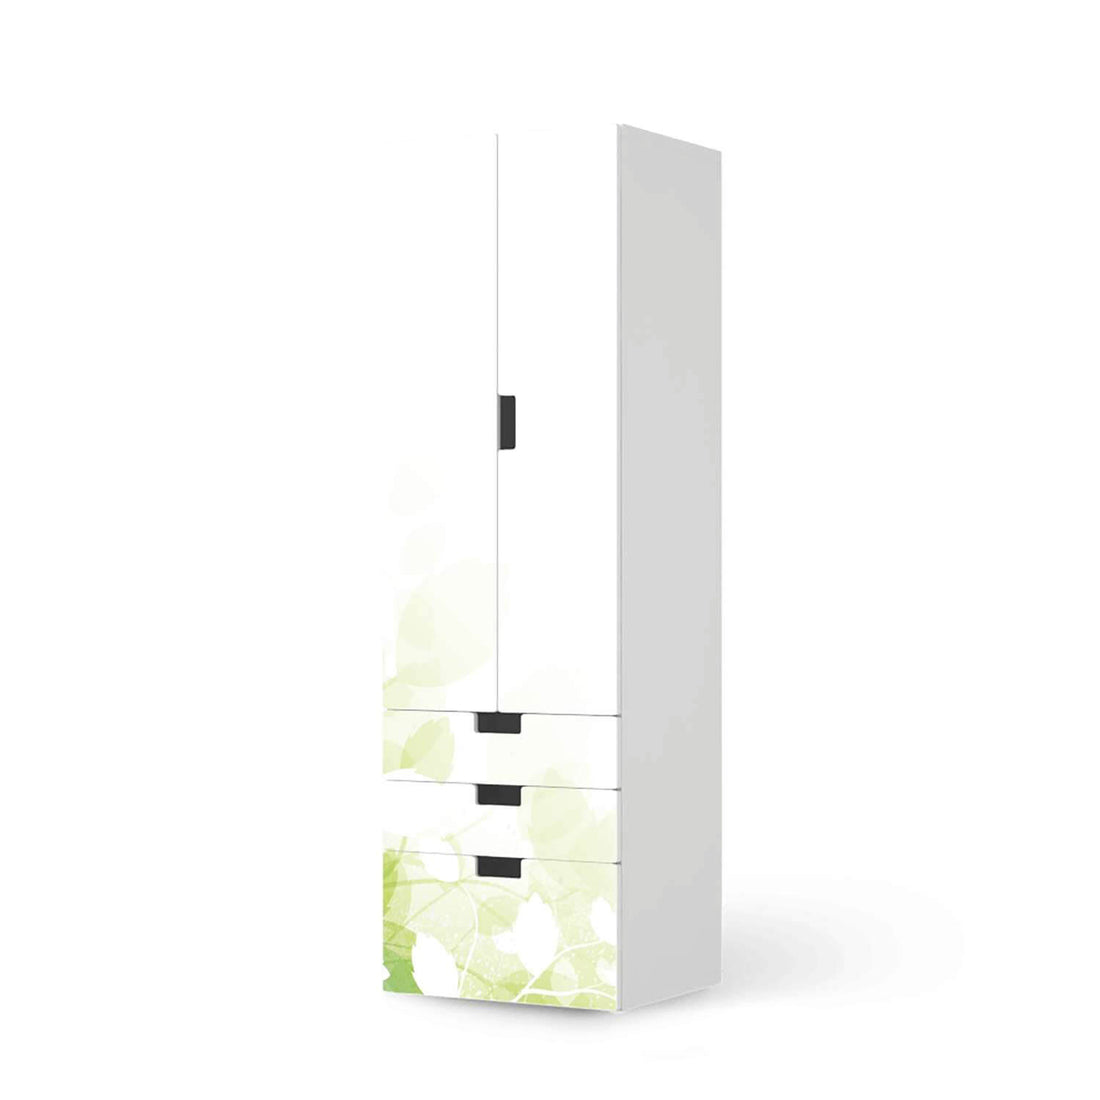 Klebefolie Flower Light - IKEA Stuva kombiniert - 3 Schubladen und 2 große Türen (Kombination 1)  - weiss